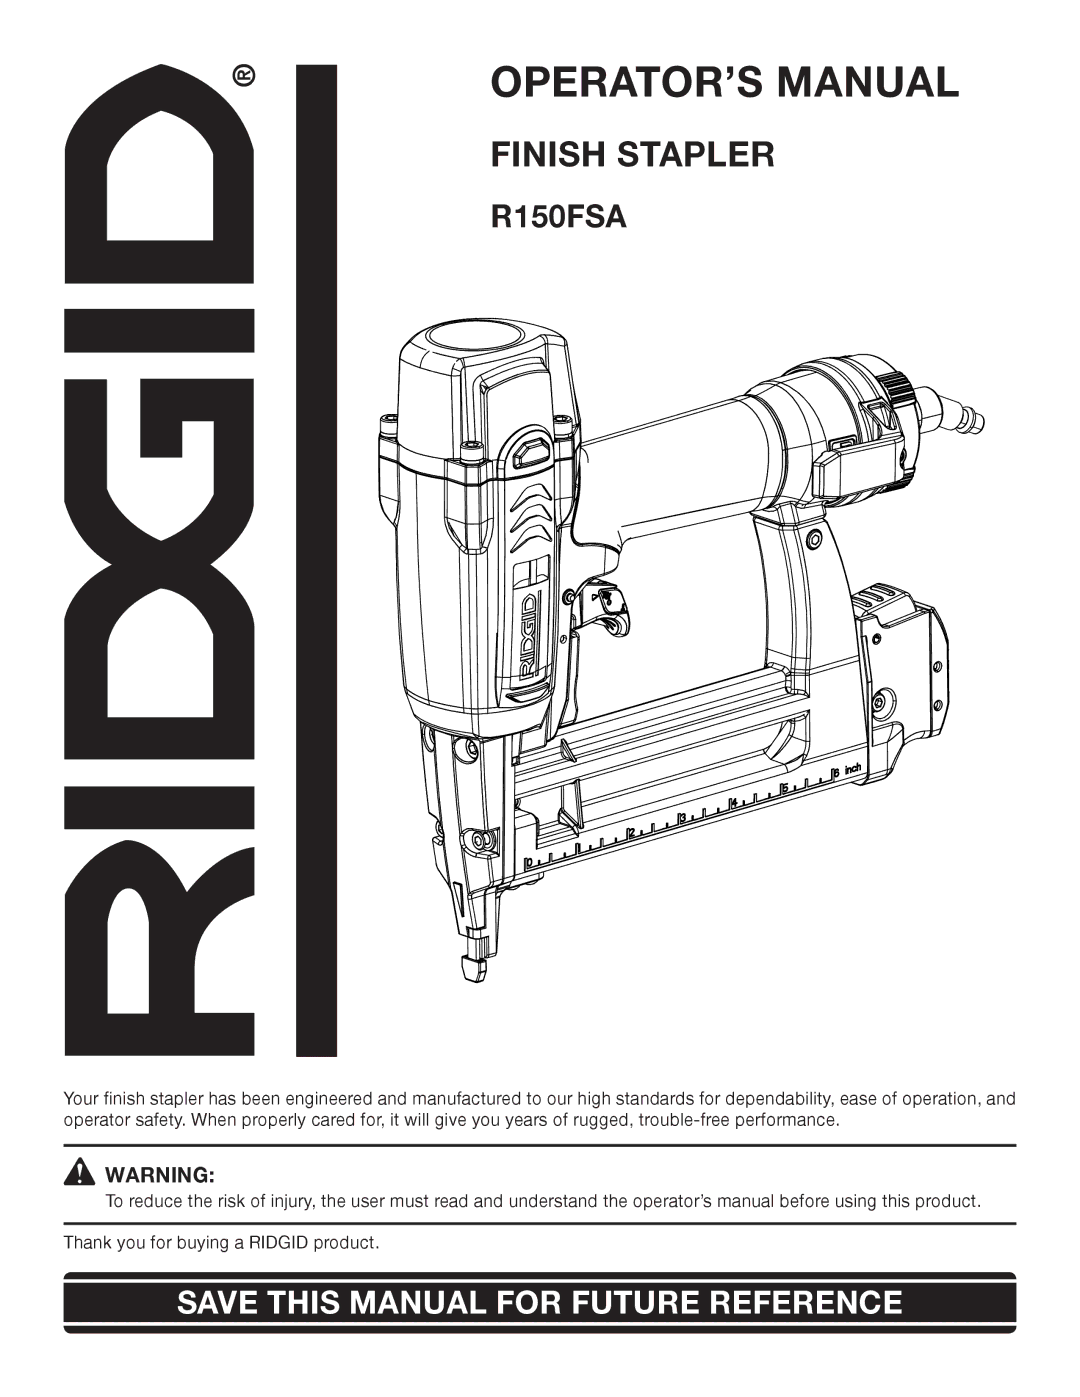 RIDGID R150FSA manual OPERATOR’S Manual 